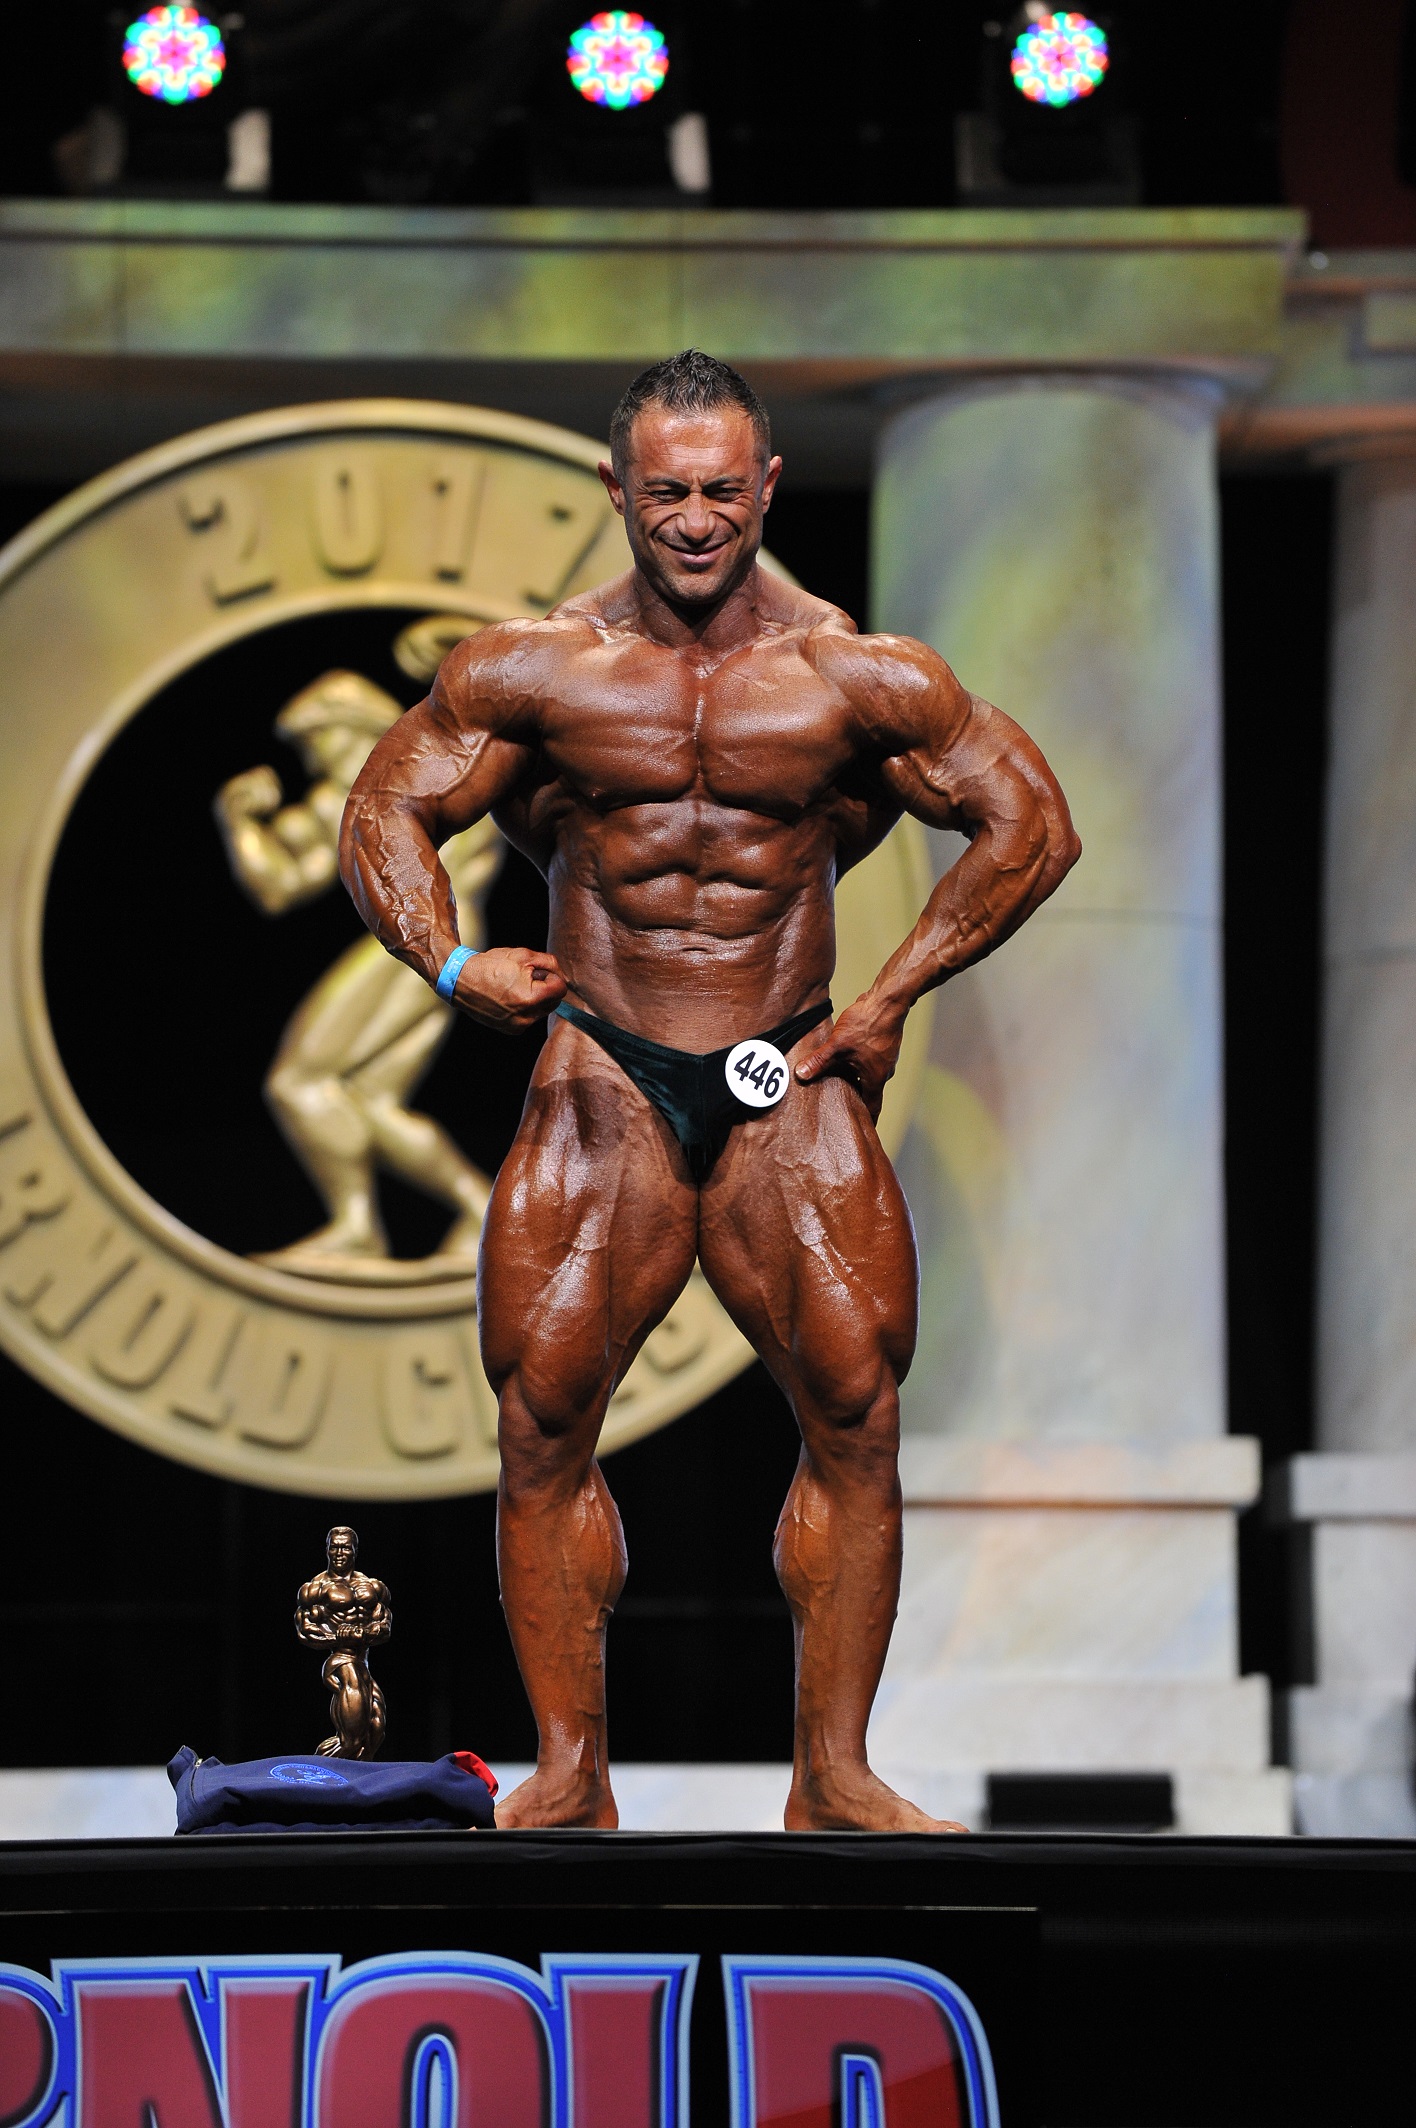 Master Mens Bodybuilding Overall Winner Ahmed Fauzi of Switerland 446 photo by Jeff Binns